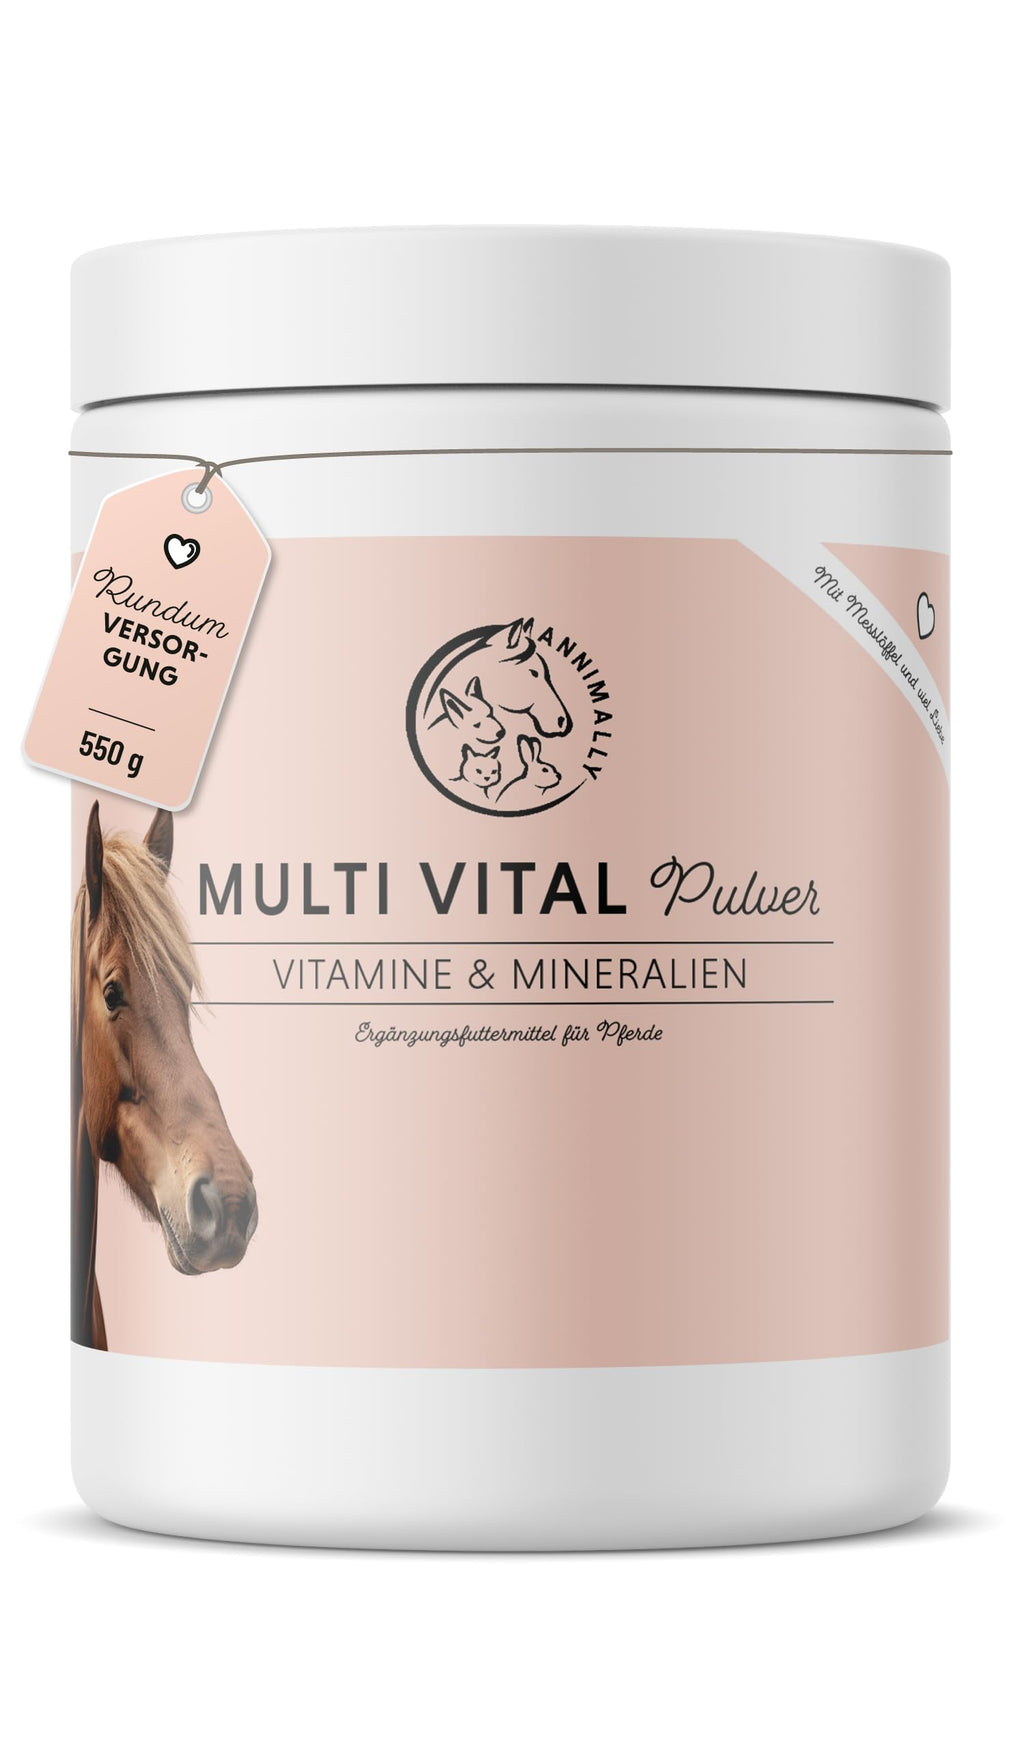 Annimally Multi Vital Powder for Horses - 550 g Multivitamin Vitamin B Complex Immune System Powder with Vitamin A, D3, Vitamin E, B1, B2, B3, B5, B6, Vitamin C, Vitamin B12, as well as folic acid and zinc - PawsPlanet Australia